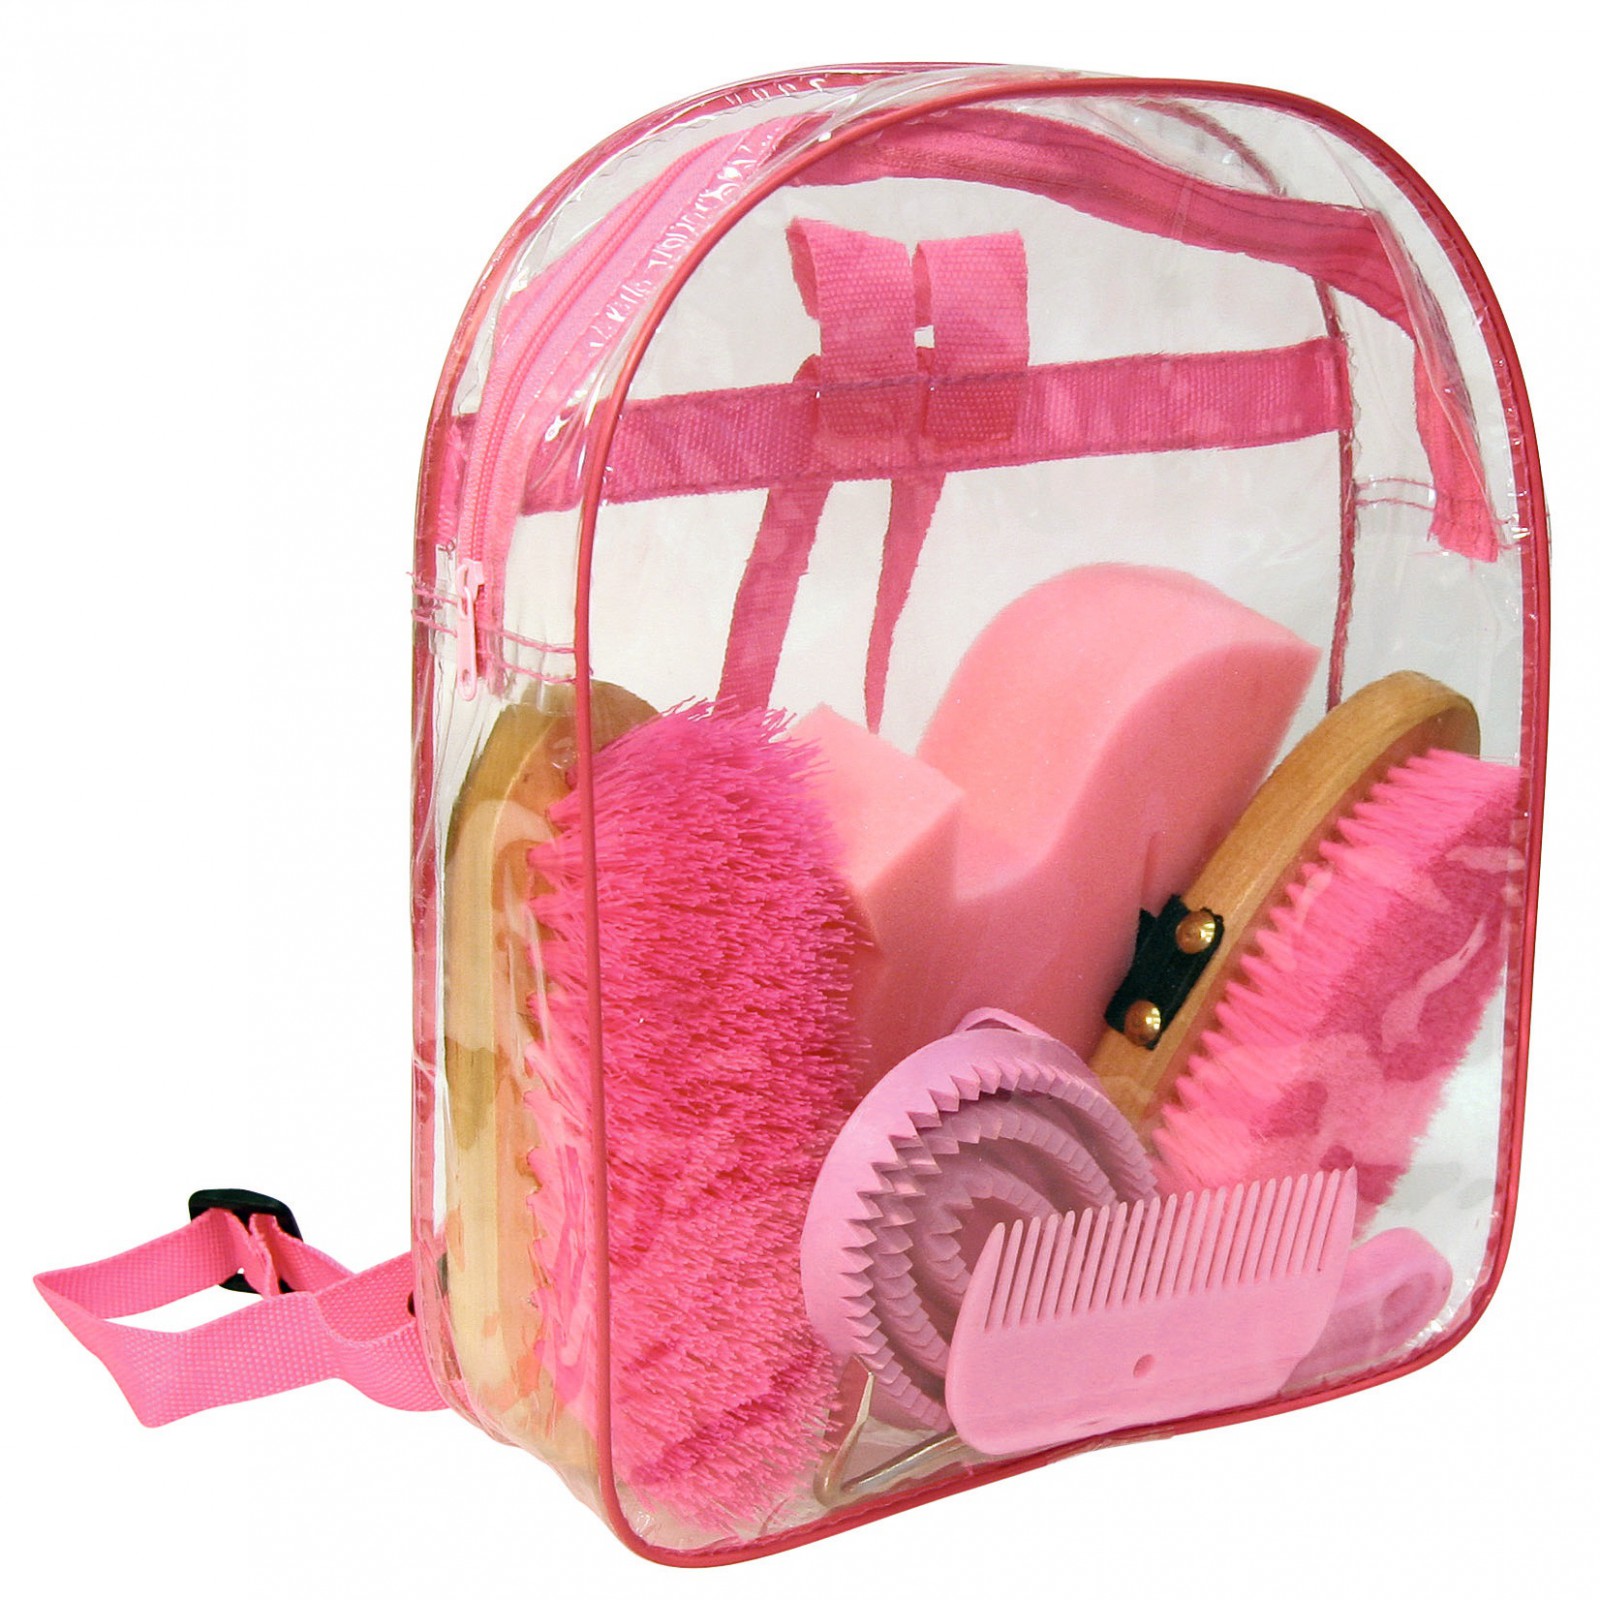 Grooming kit Backpack, pink hot pink